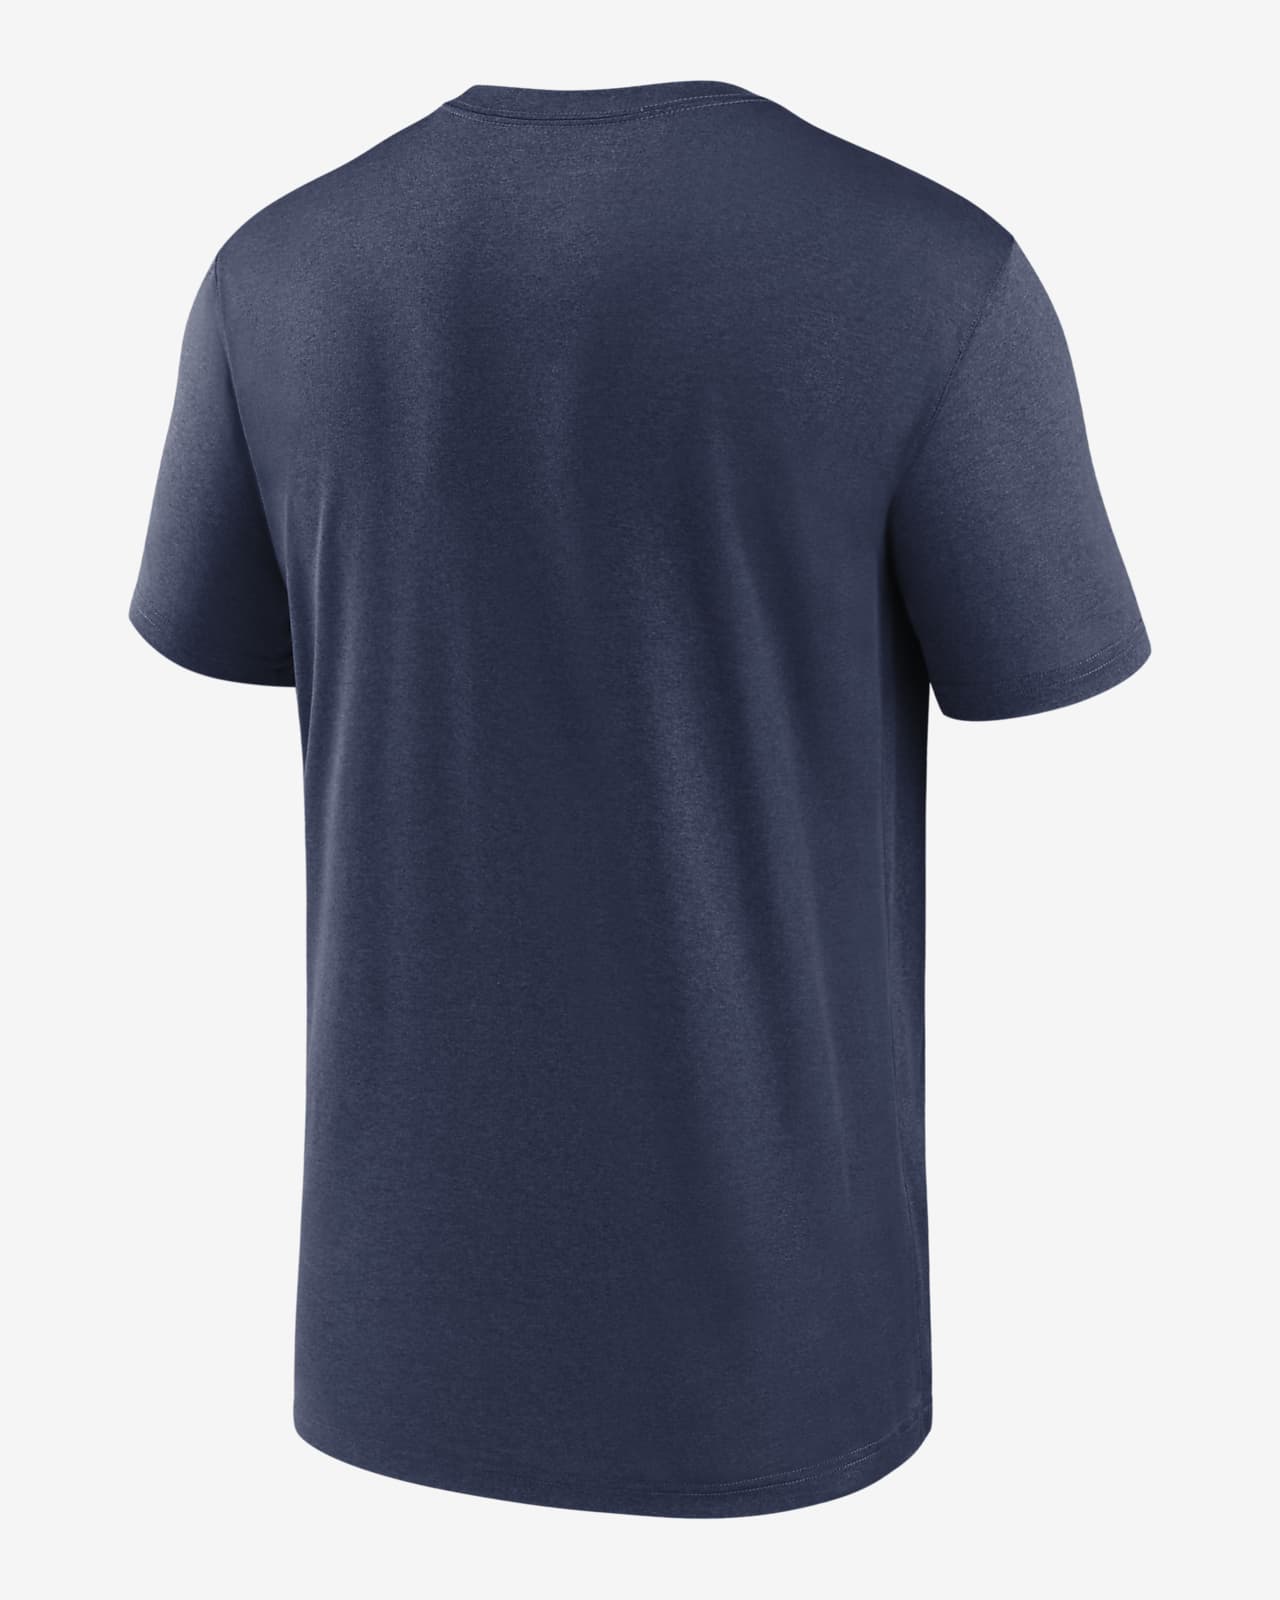 Nike Dri-FIT Icon Legend (MLB Detroit Tigers) Men's T-Shirt.